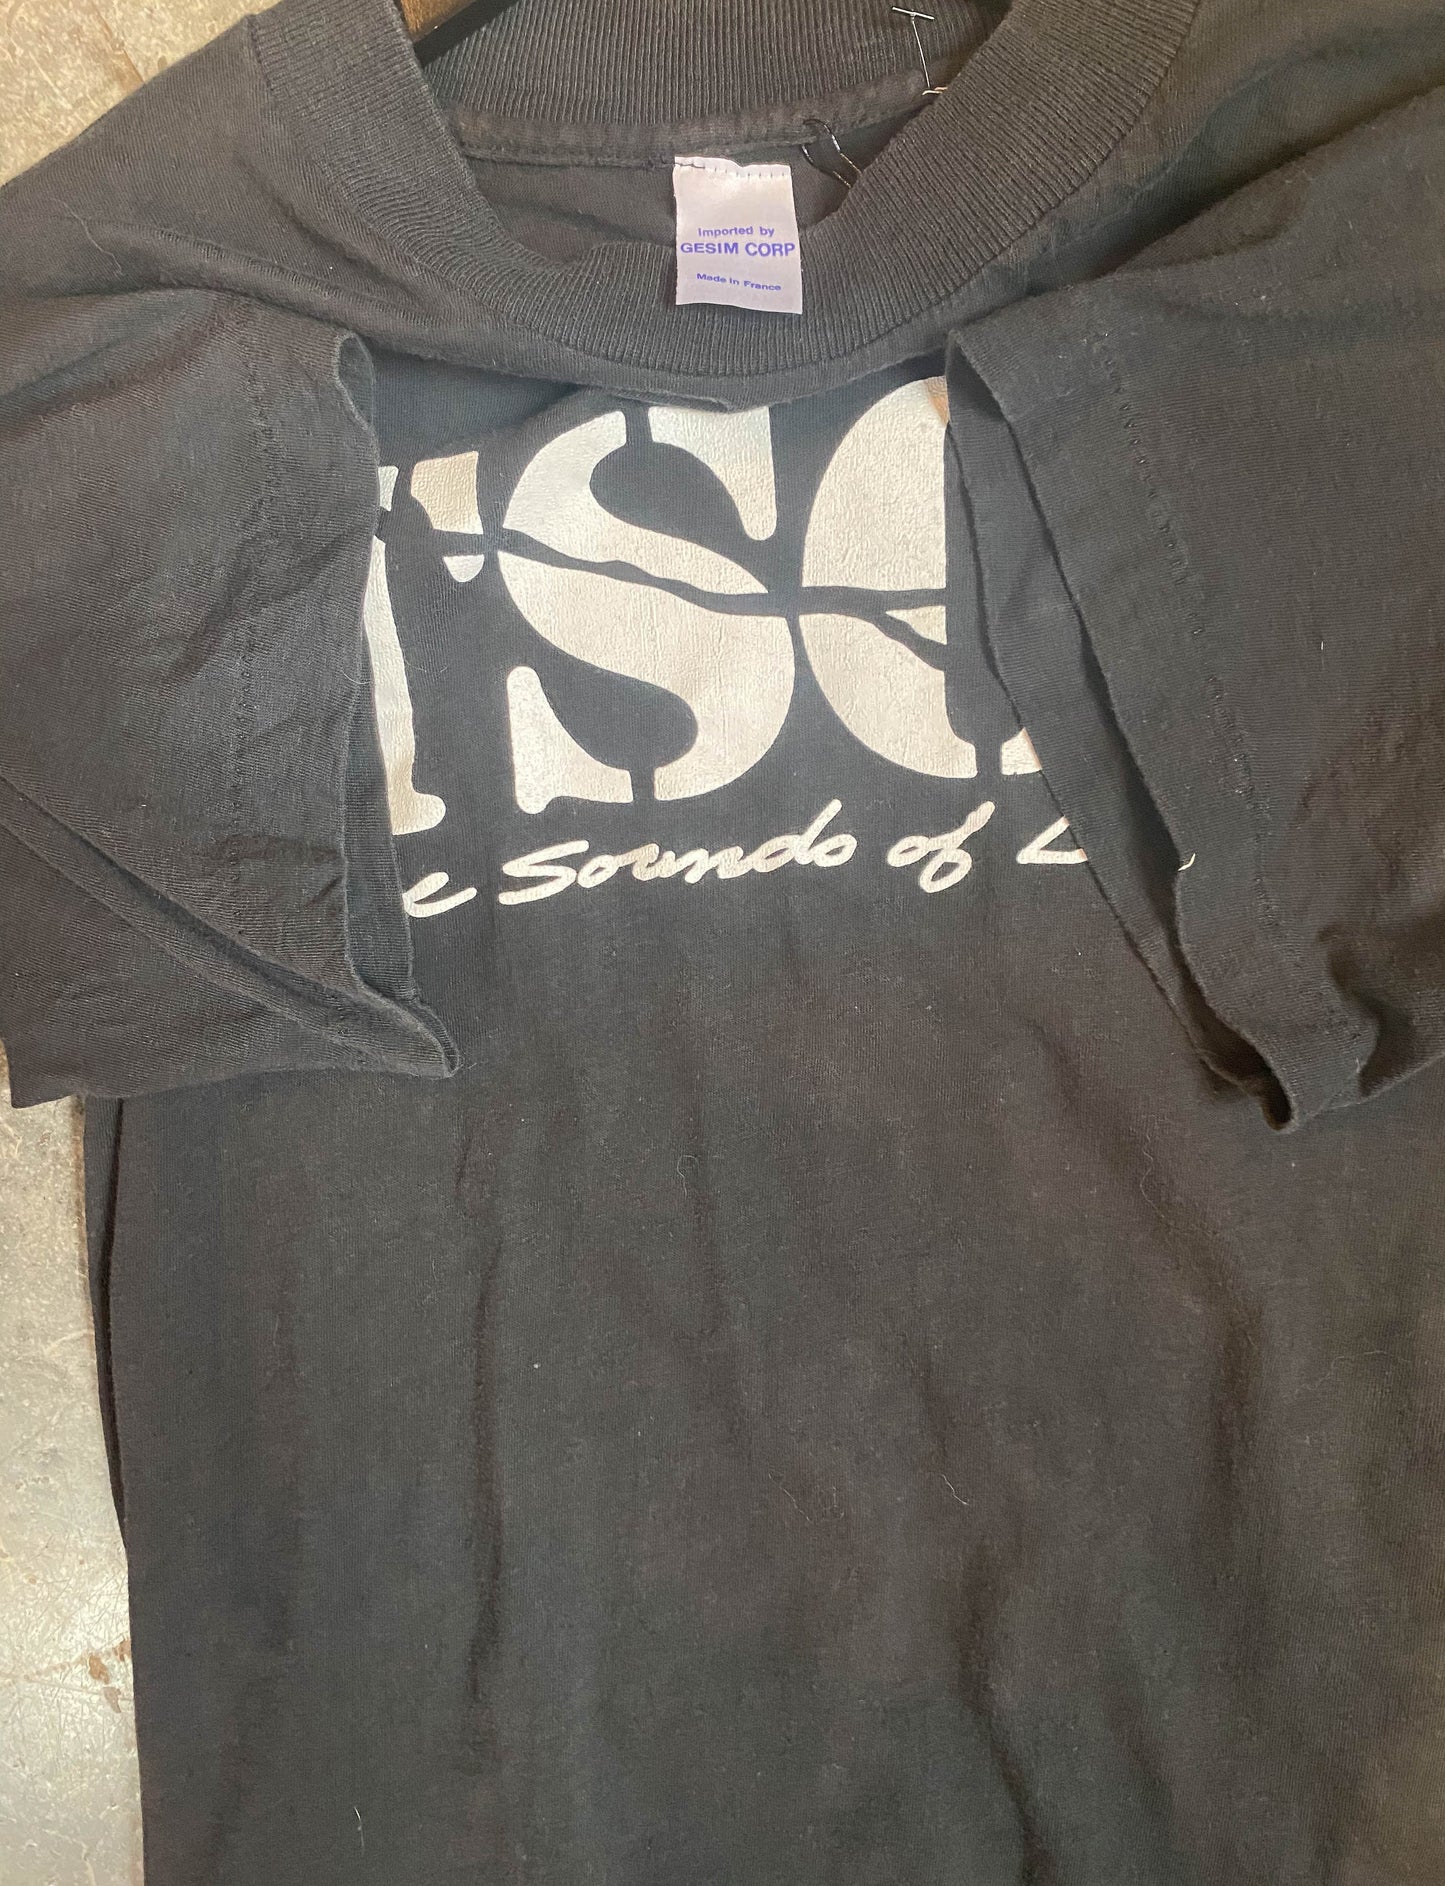 Vintage 80's TSOL True Sounds Of Liberty Concert T Shirt Black Unisex Small